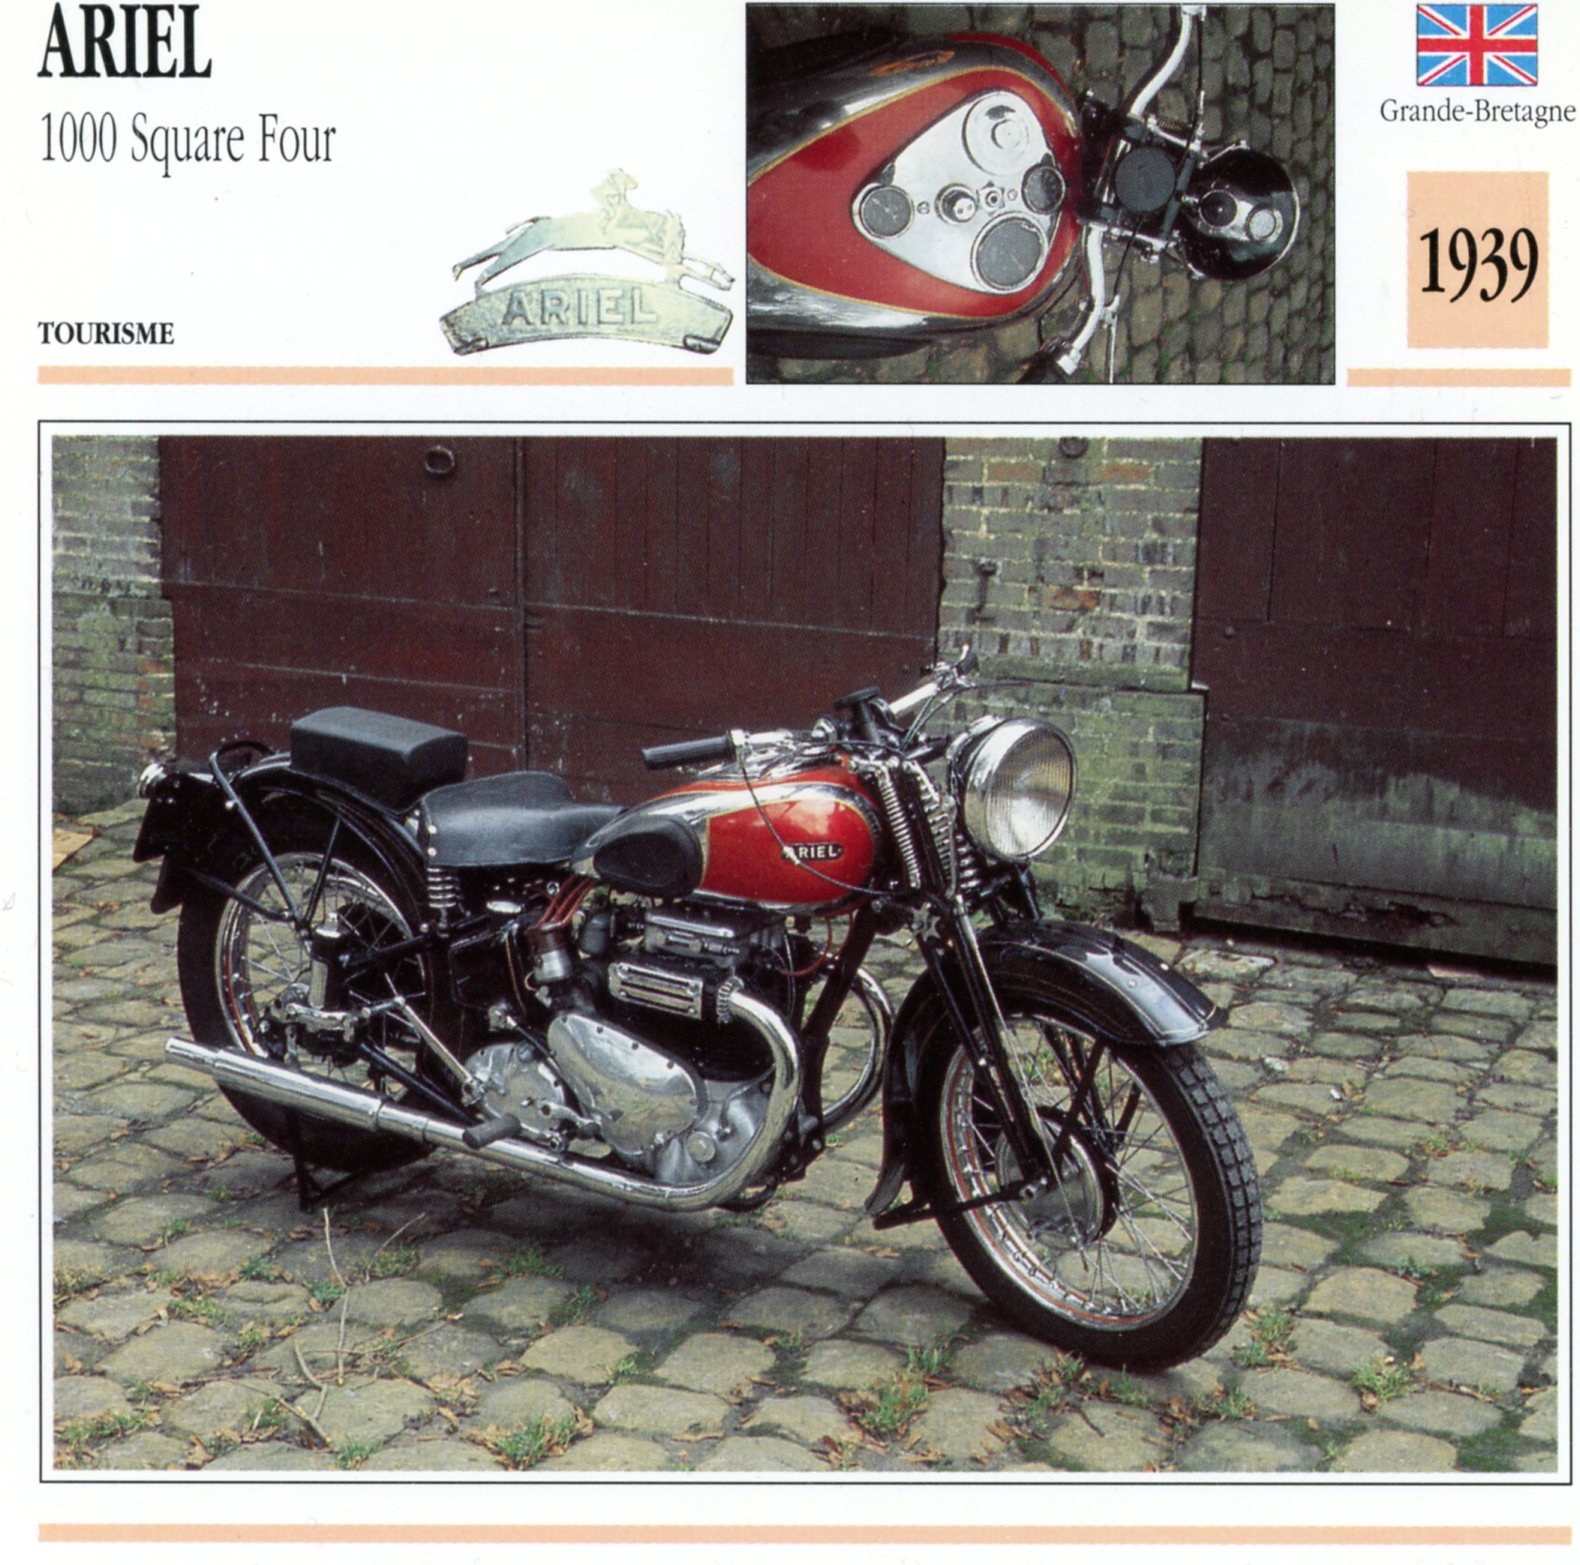 ARIEL 1000 SQUARE FOUR 1939 - CARTE CARD FICHE MOTO CARACTERISTIQUES